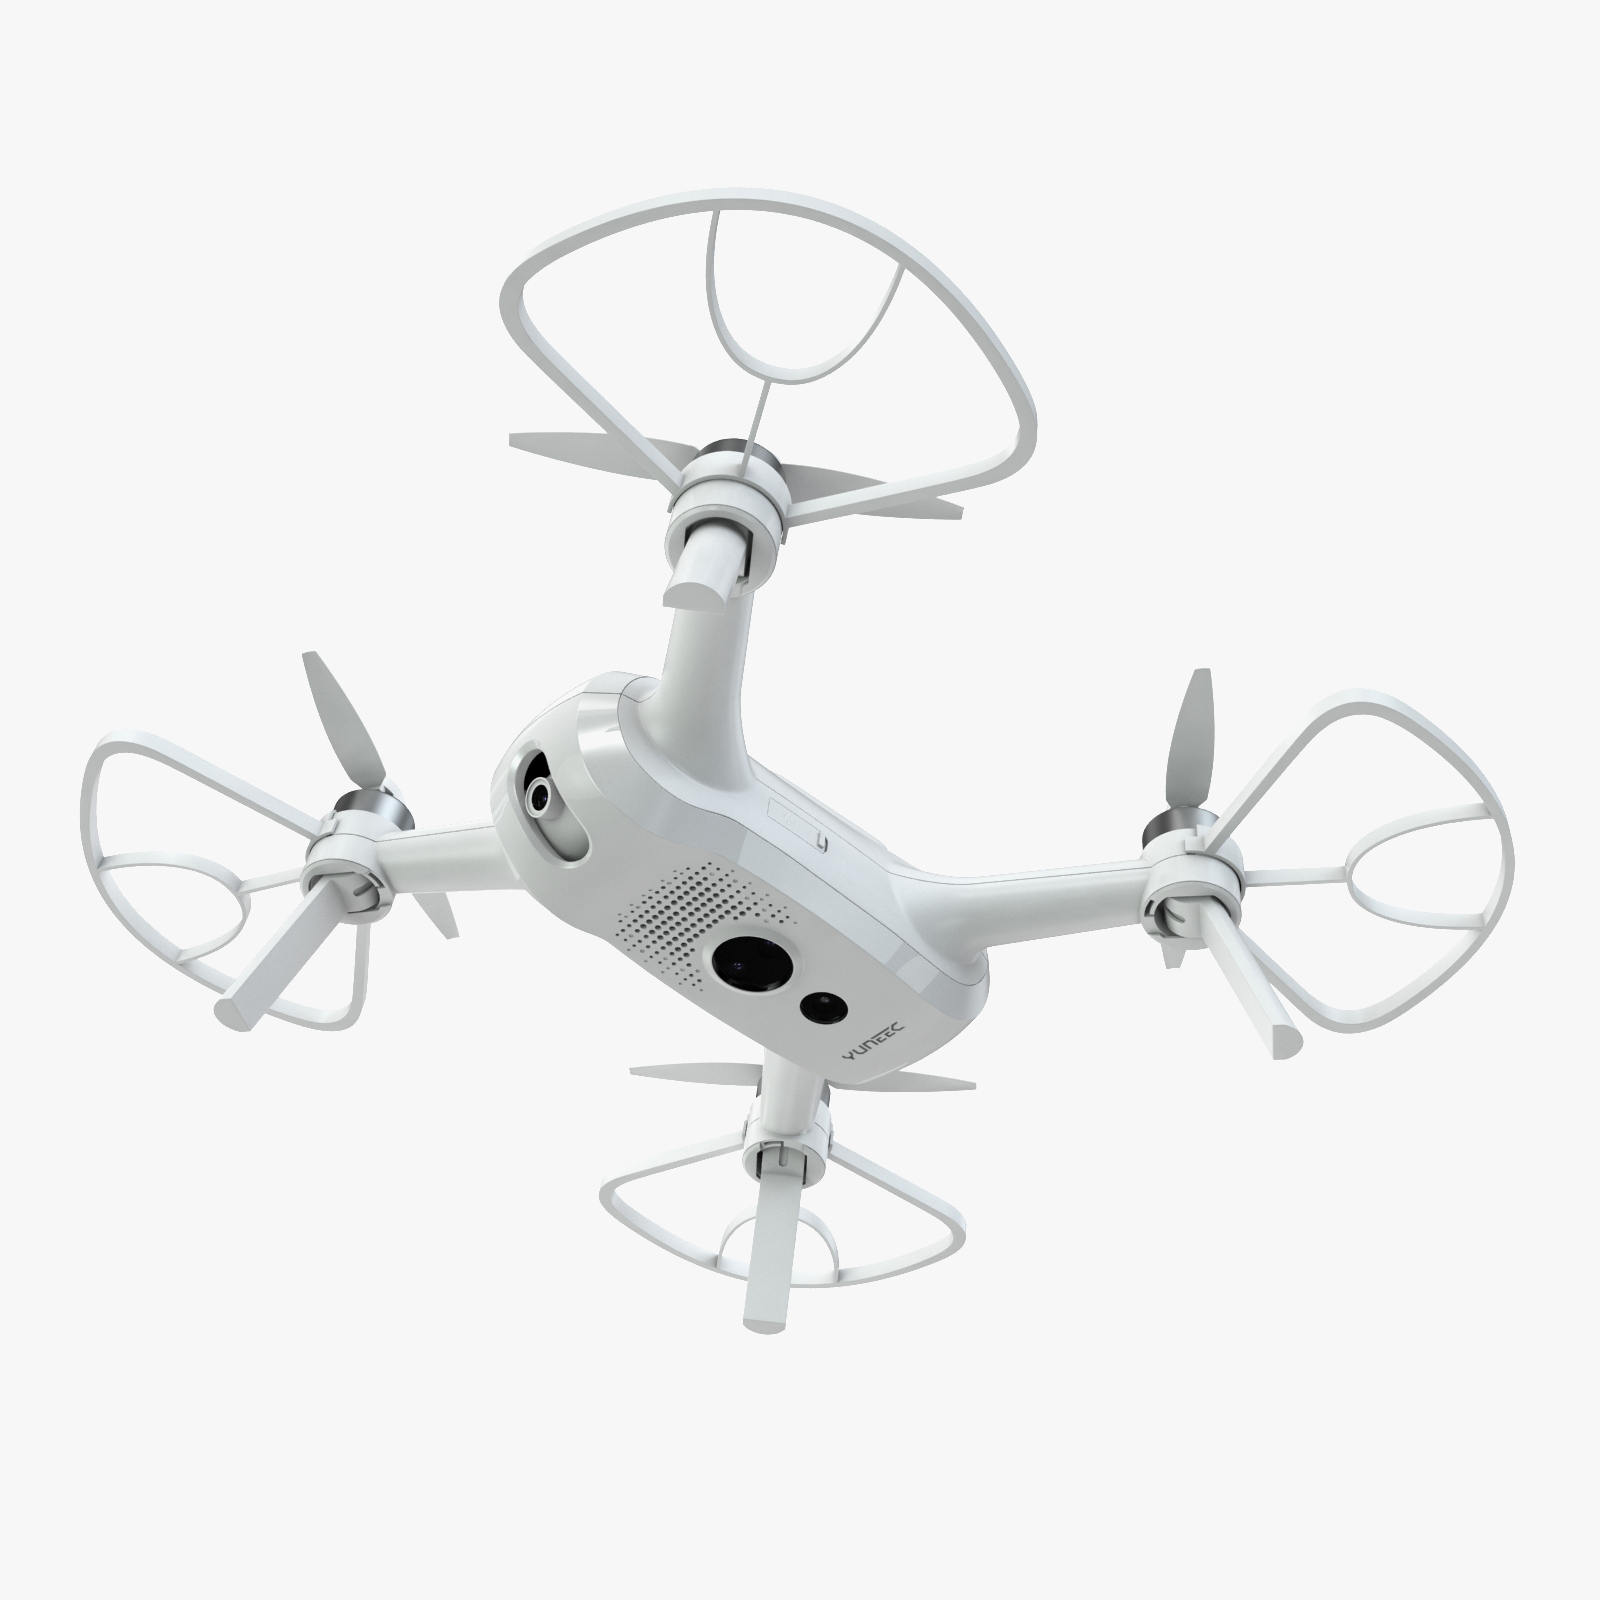 Drone 3d Model Drone